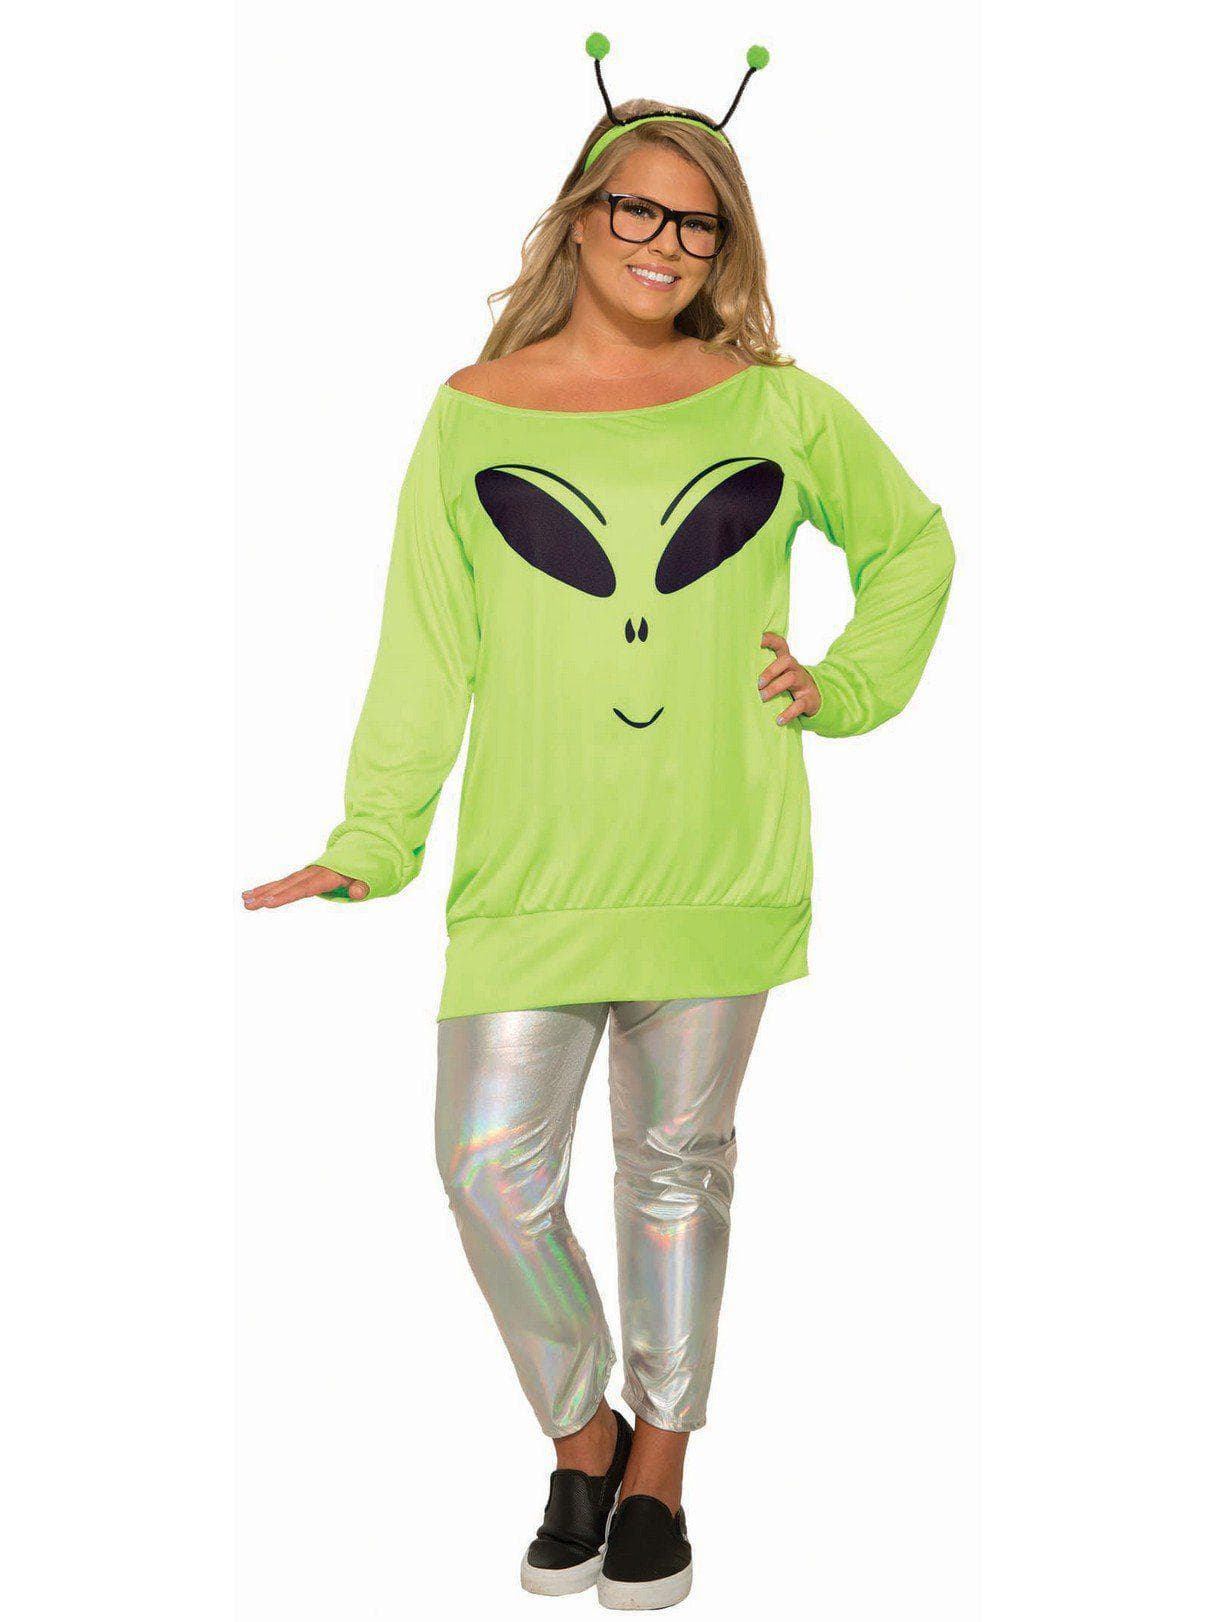 Adult Spaced Out Shirt, Leggings & Antennae Plus Costume - costumes.com